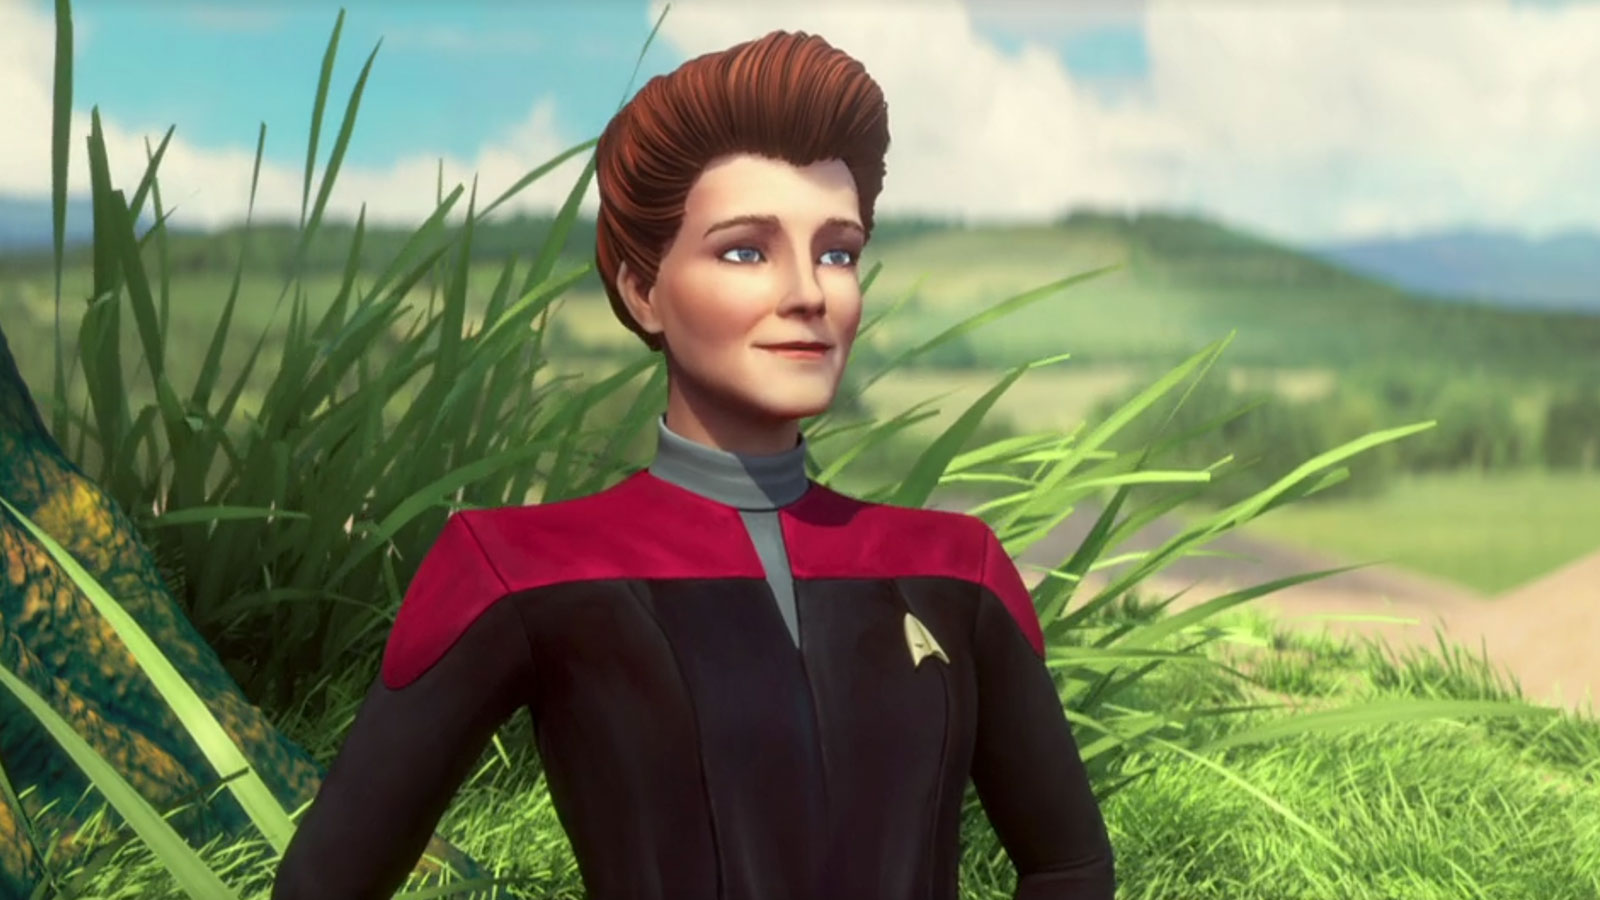 Star Trek: Prodigy 108 "Time Amok" Review: A True 'Trek' Episode Through-And-Through